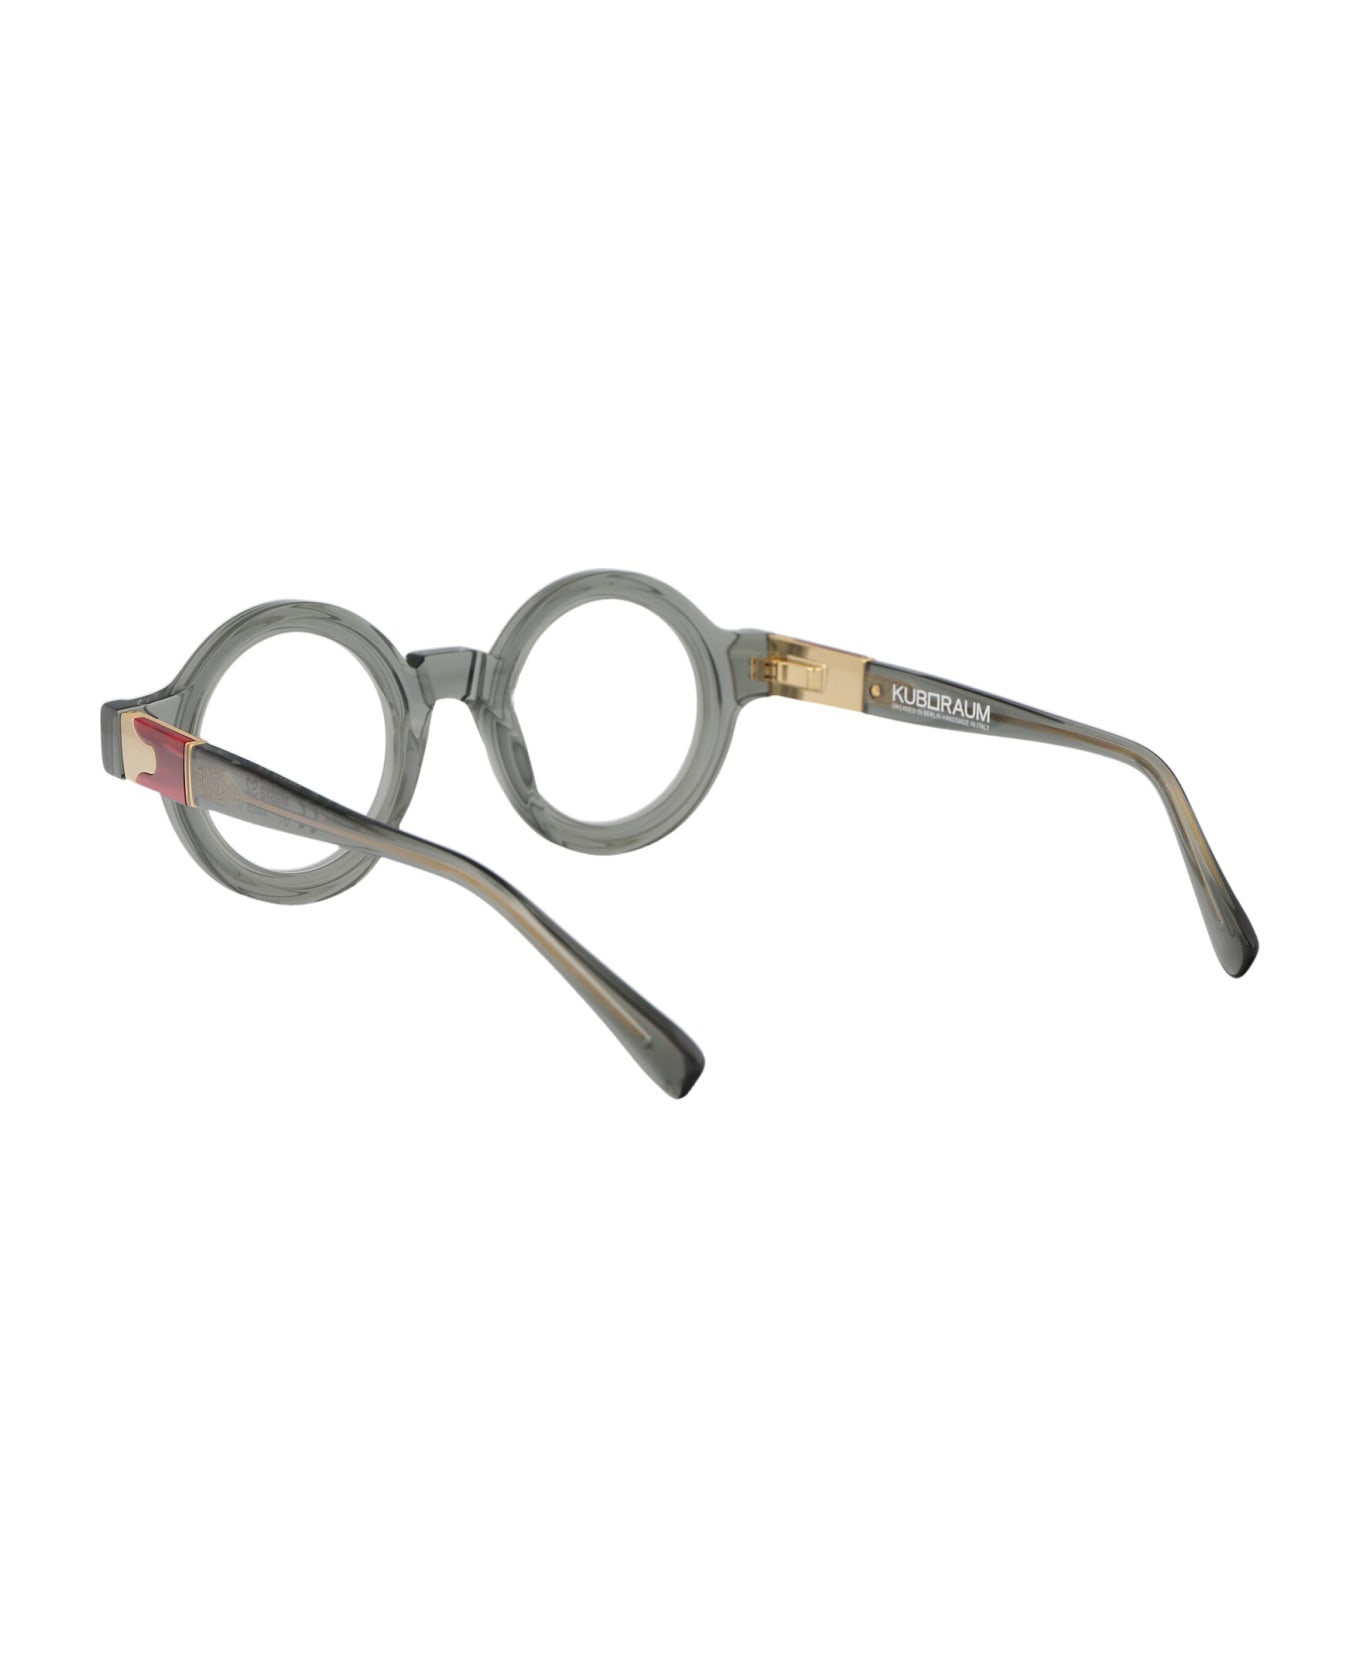 Kuboraum Maske S2 Glasses - GY